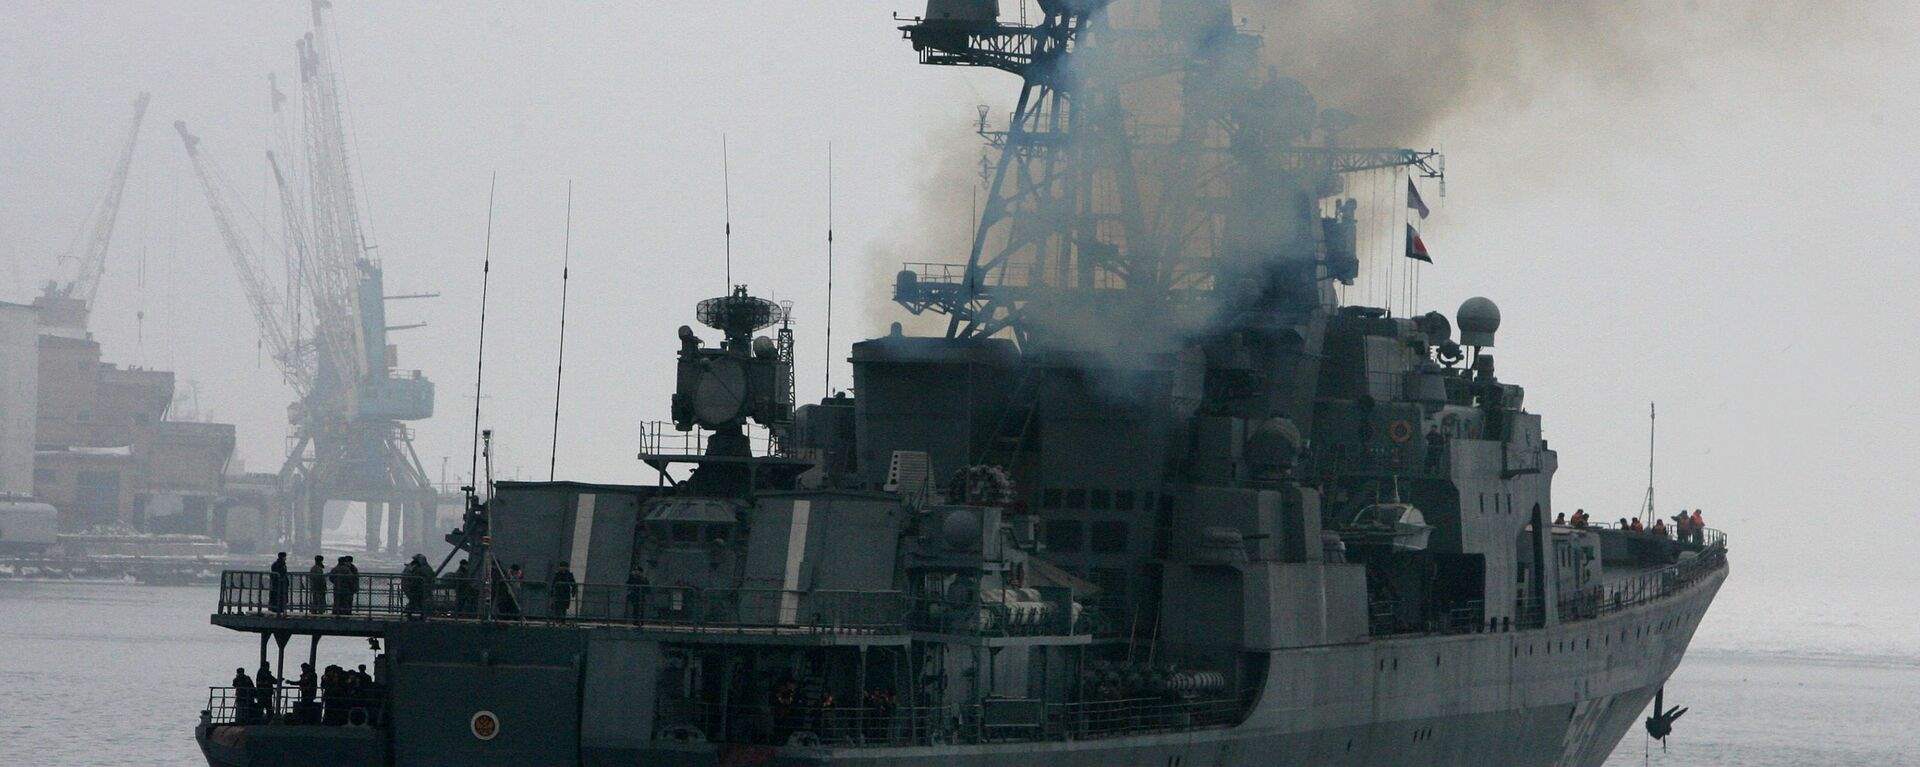 &quot;أنصار الله&quot; تعلن استهداف سفينة أميركية في خليج عدن 